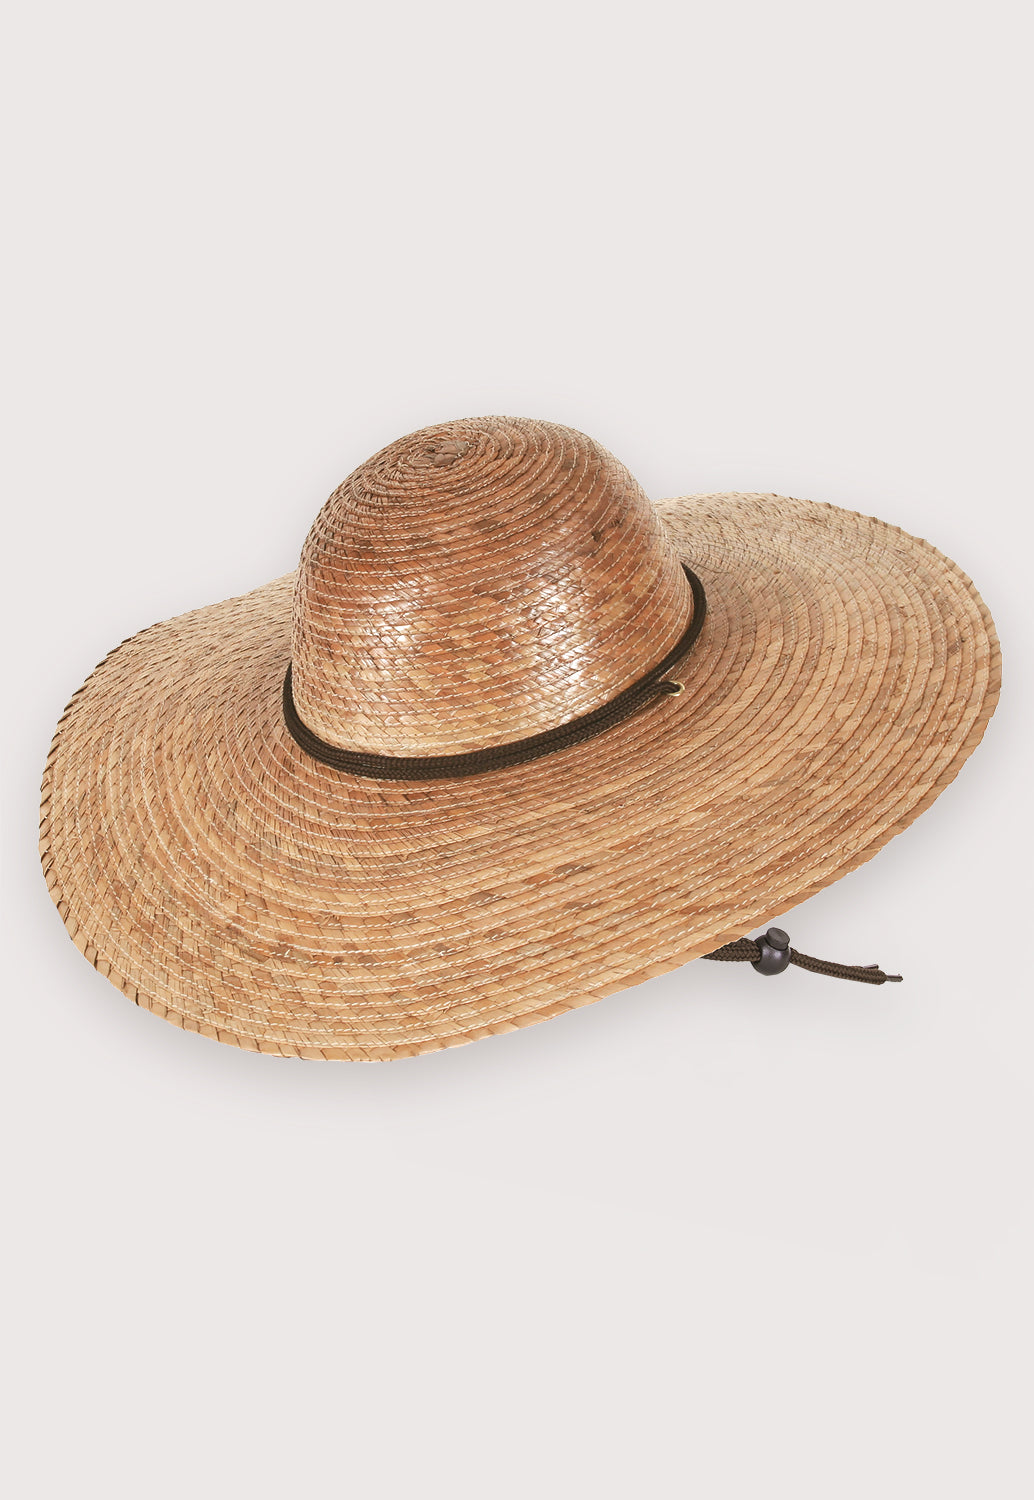 Women's Beach Hat, Handwoven Palm Hat